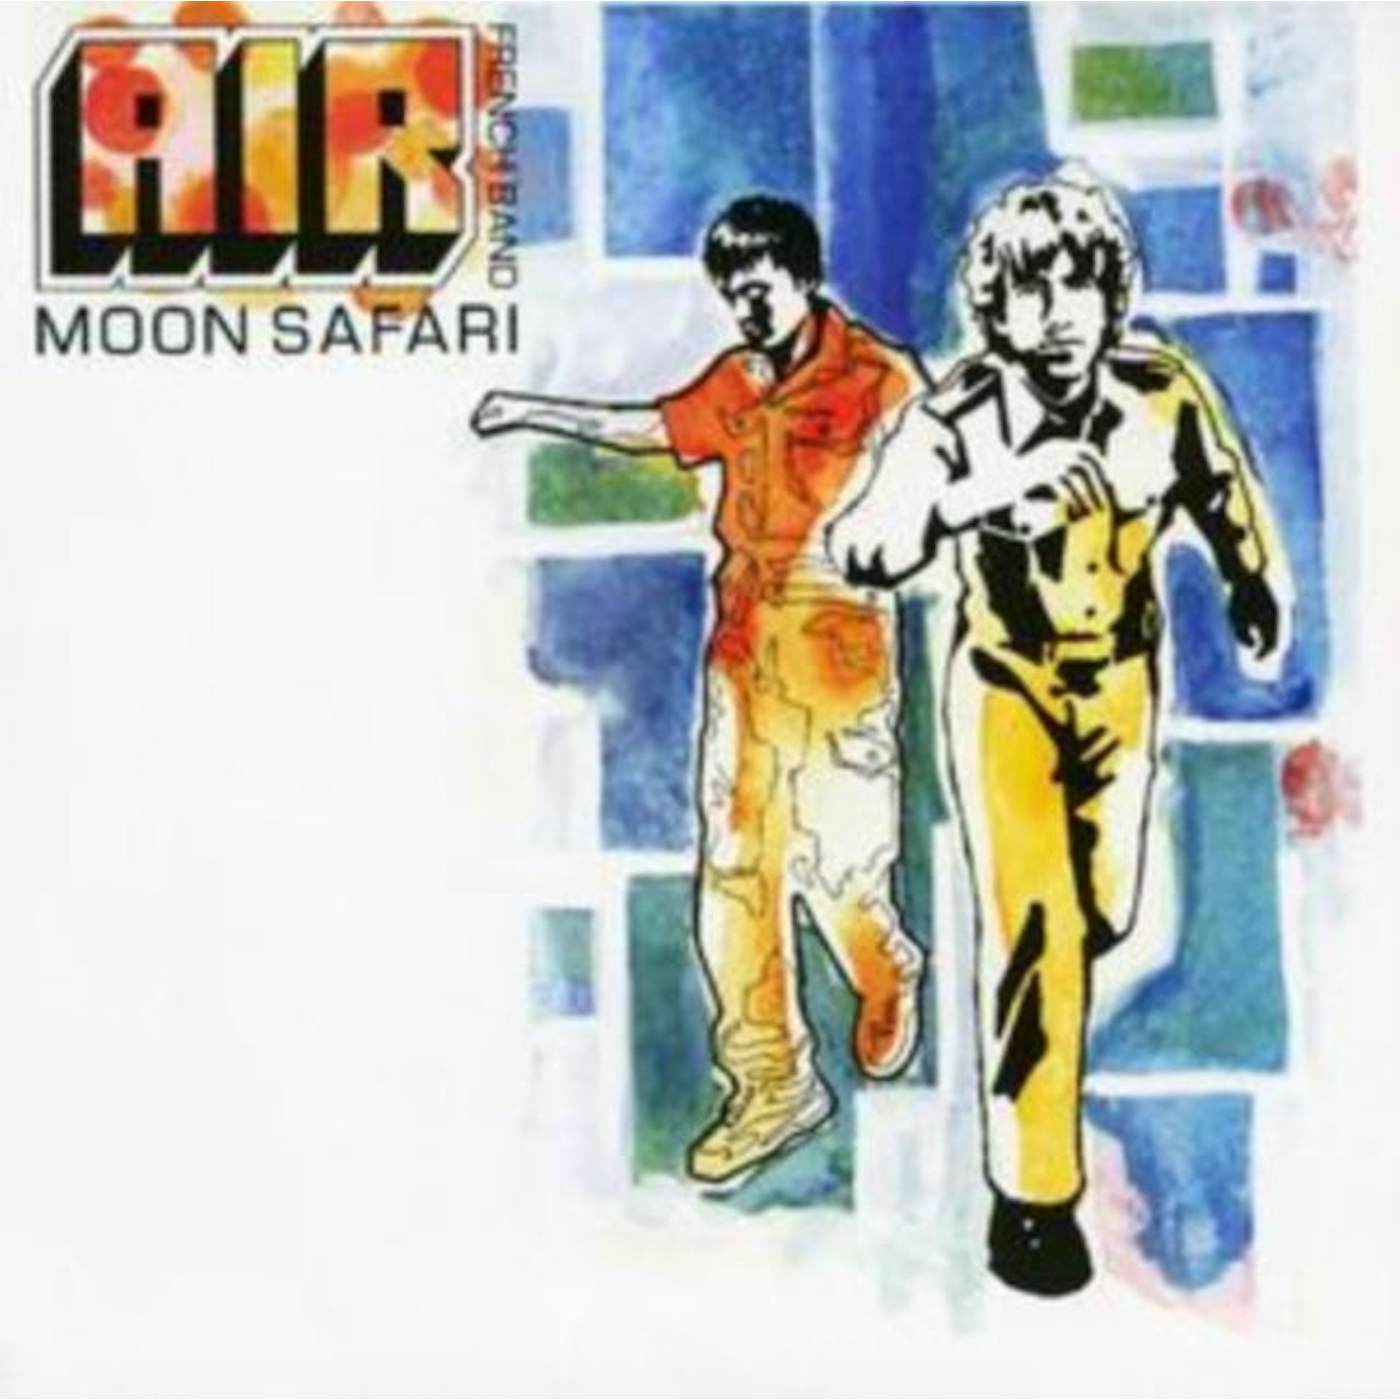 Air CD - Moon Safari